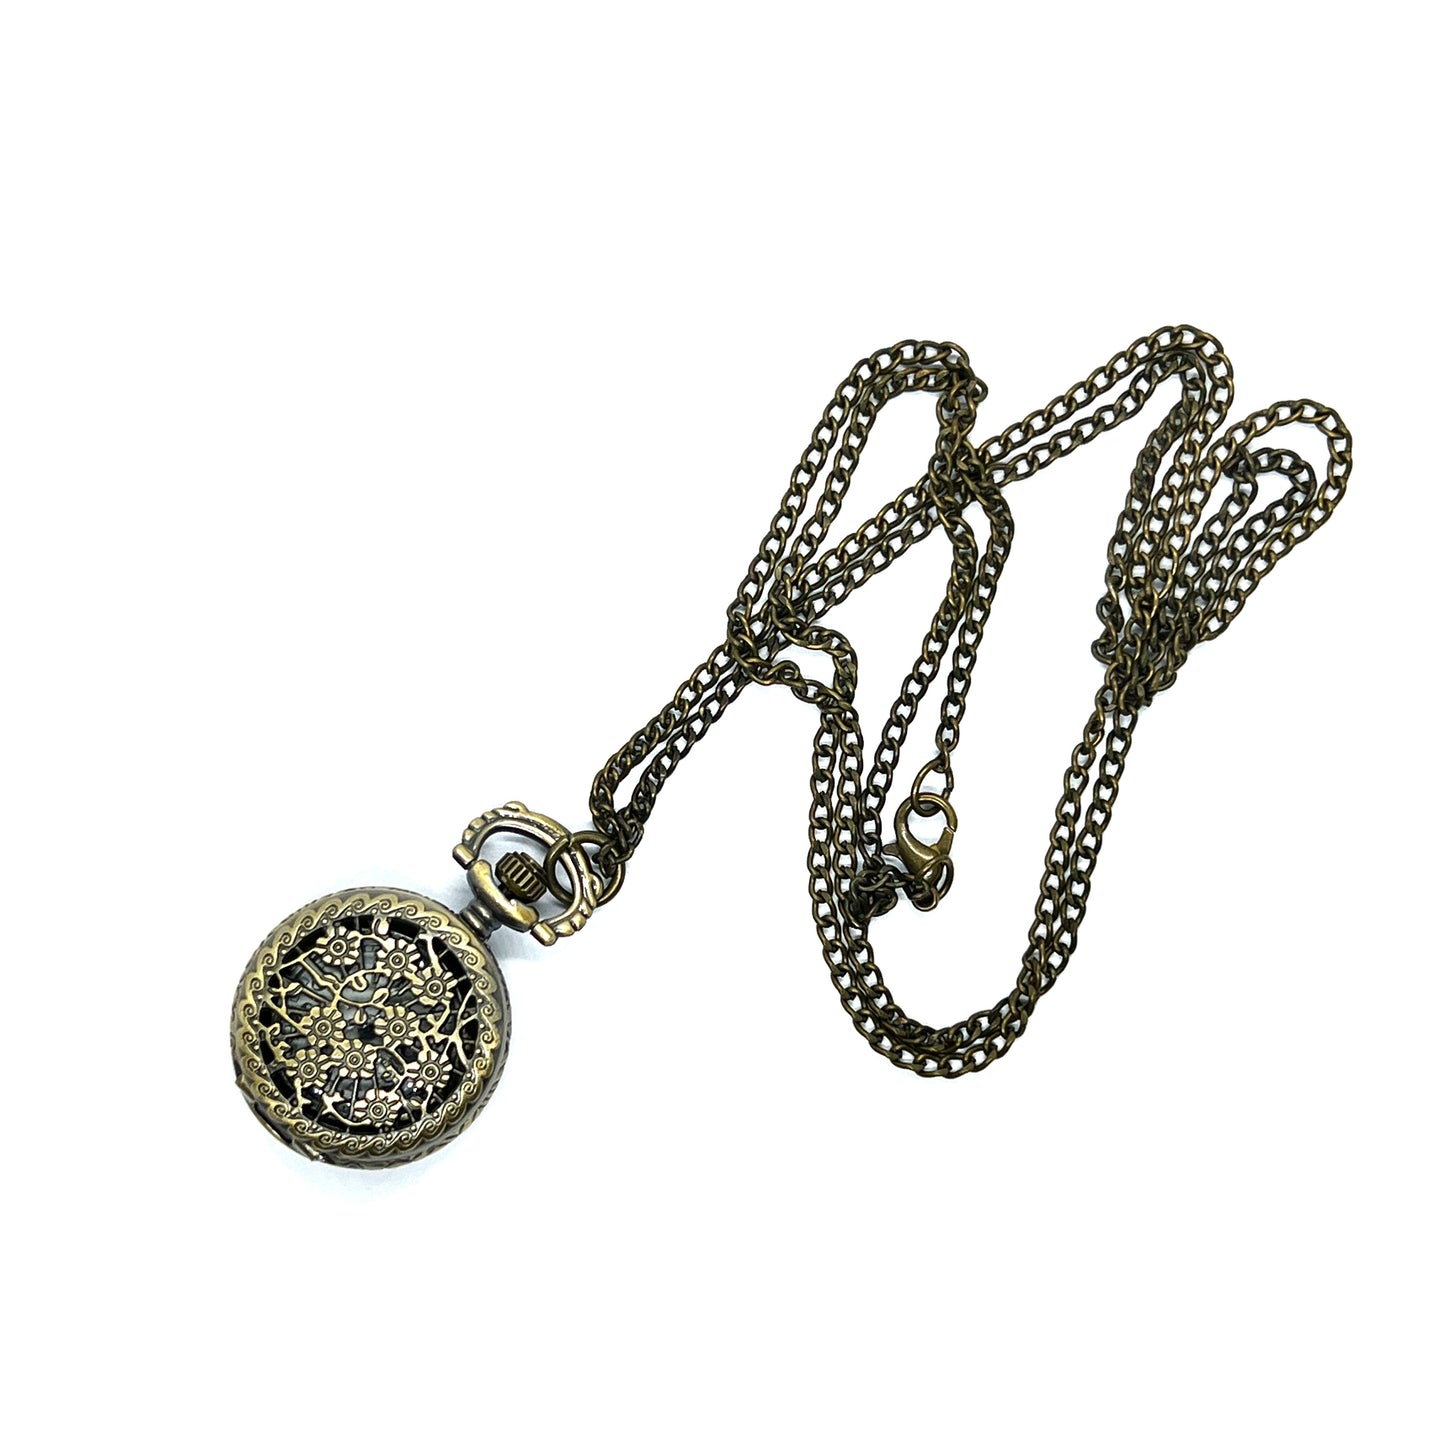 Vintage Watch Floral Necklace